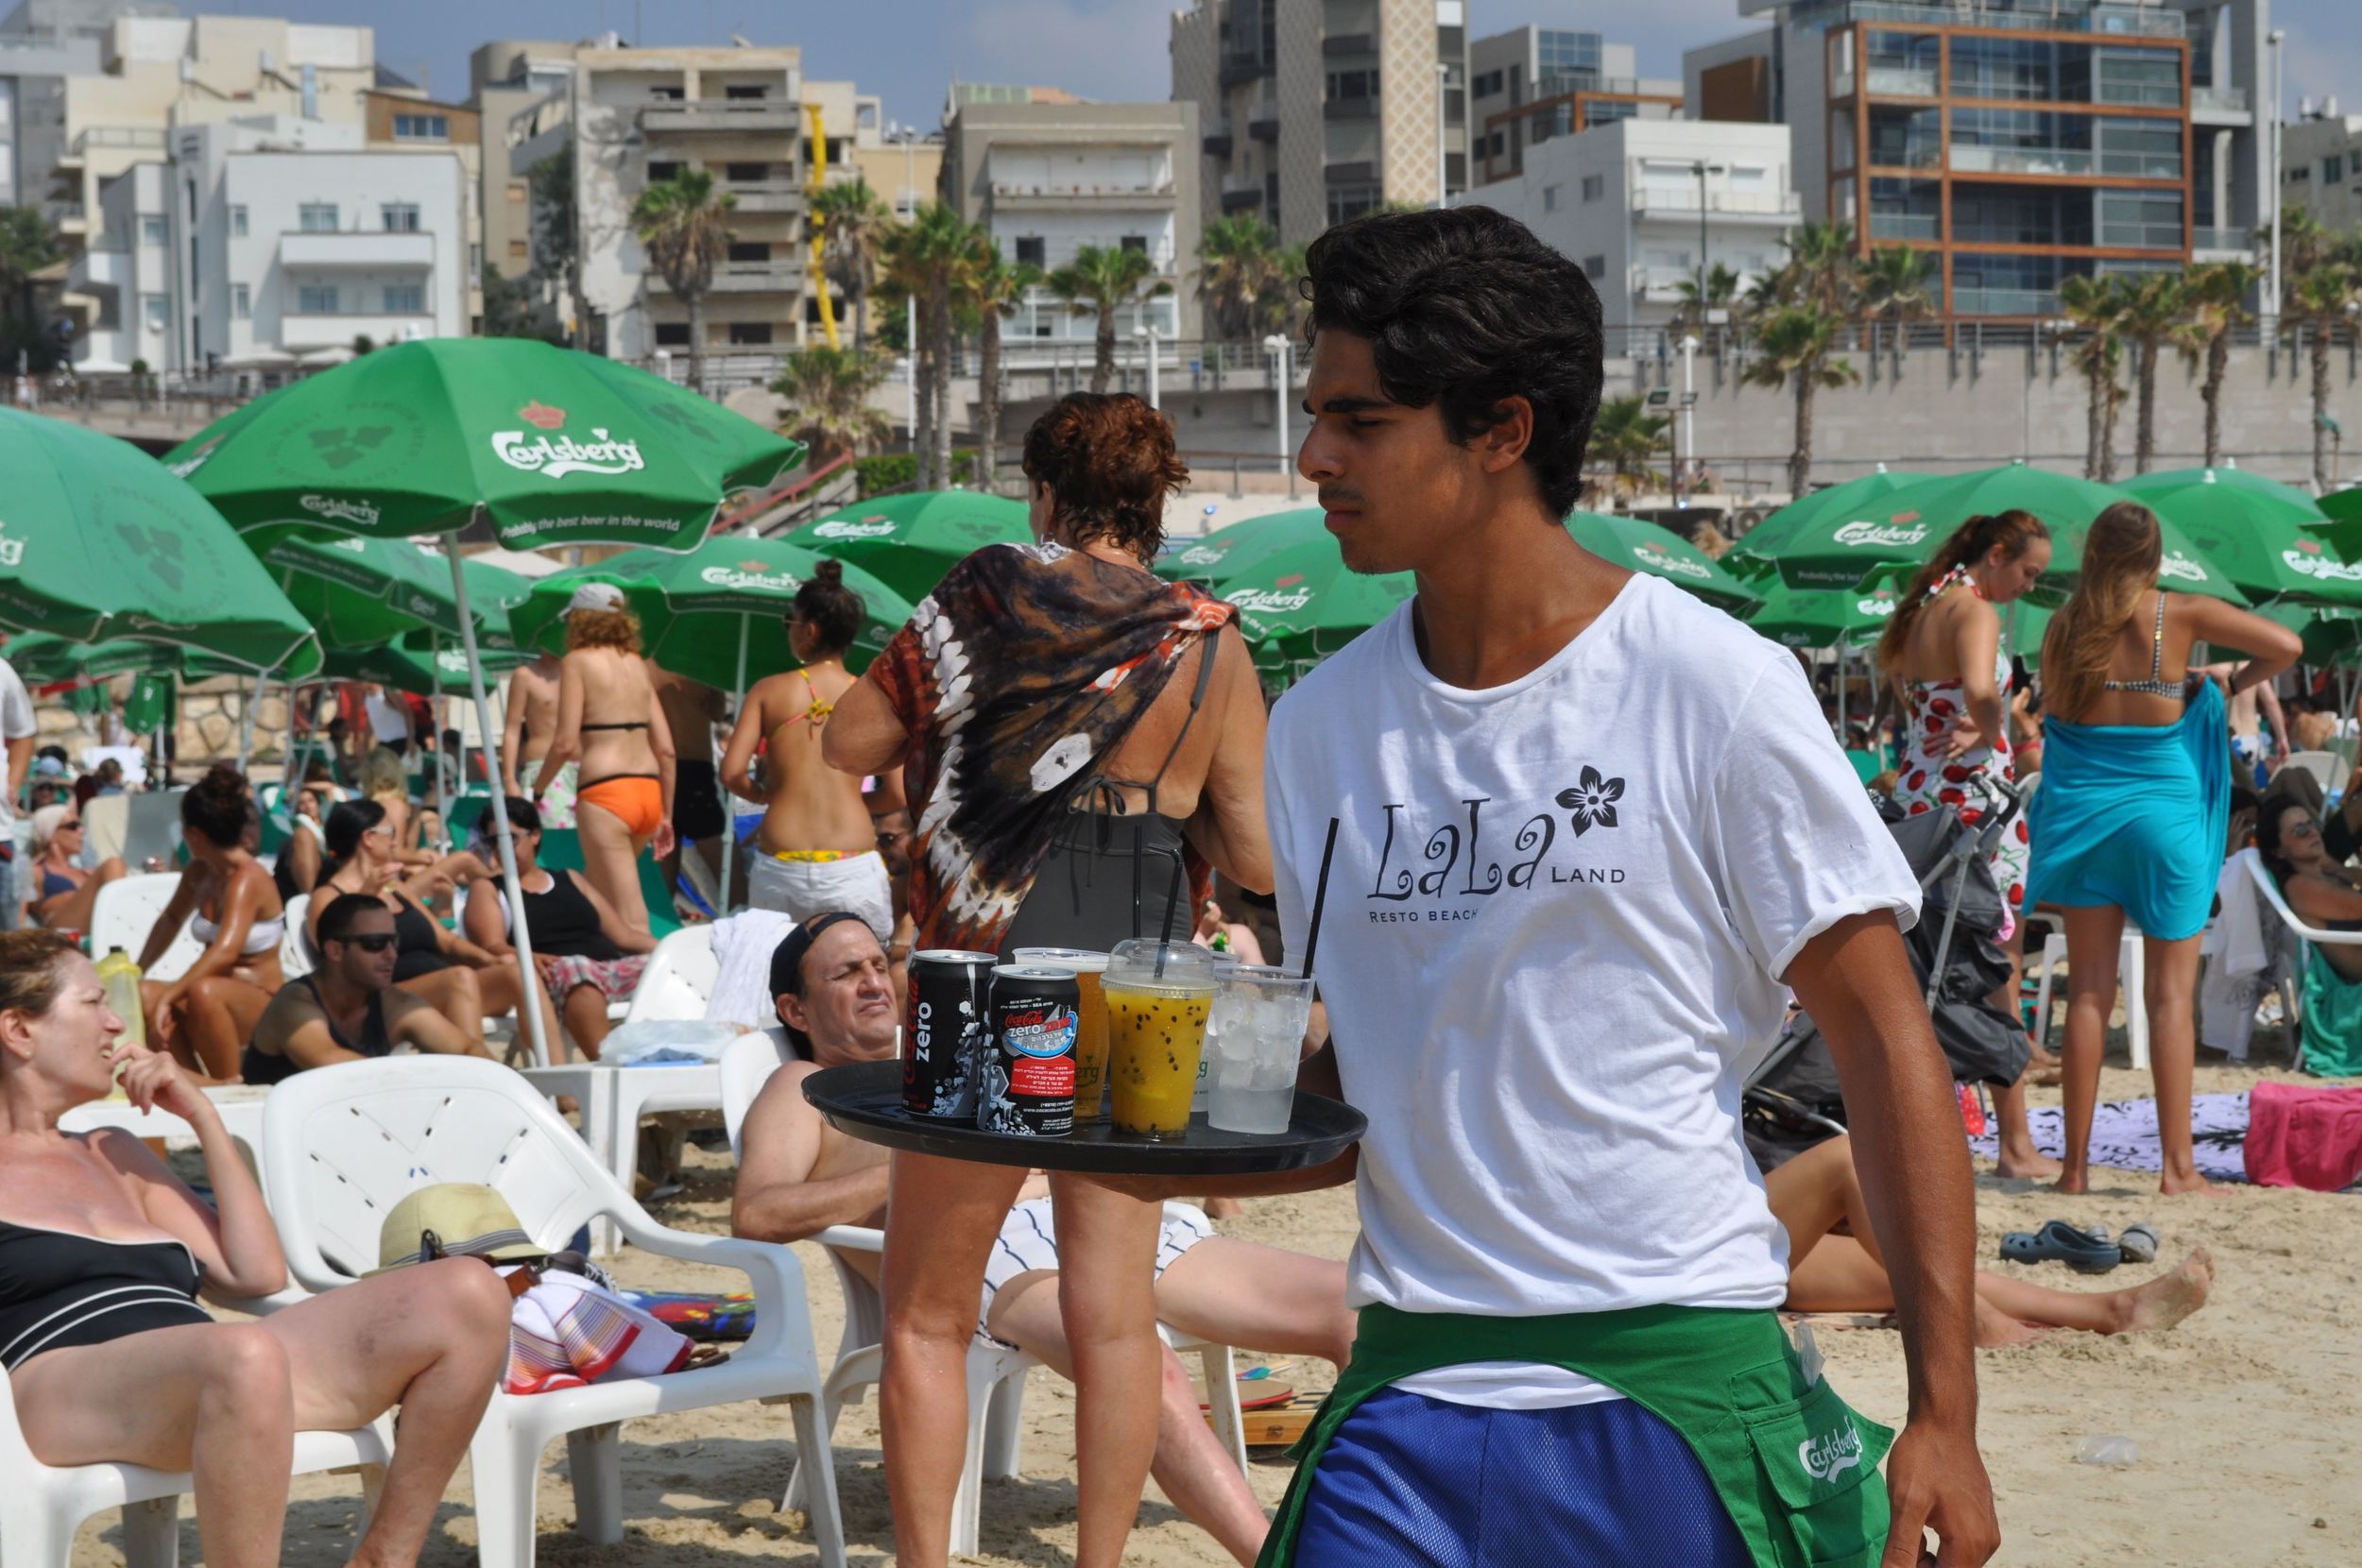 Copy of tel aviv beach scene.jpg